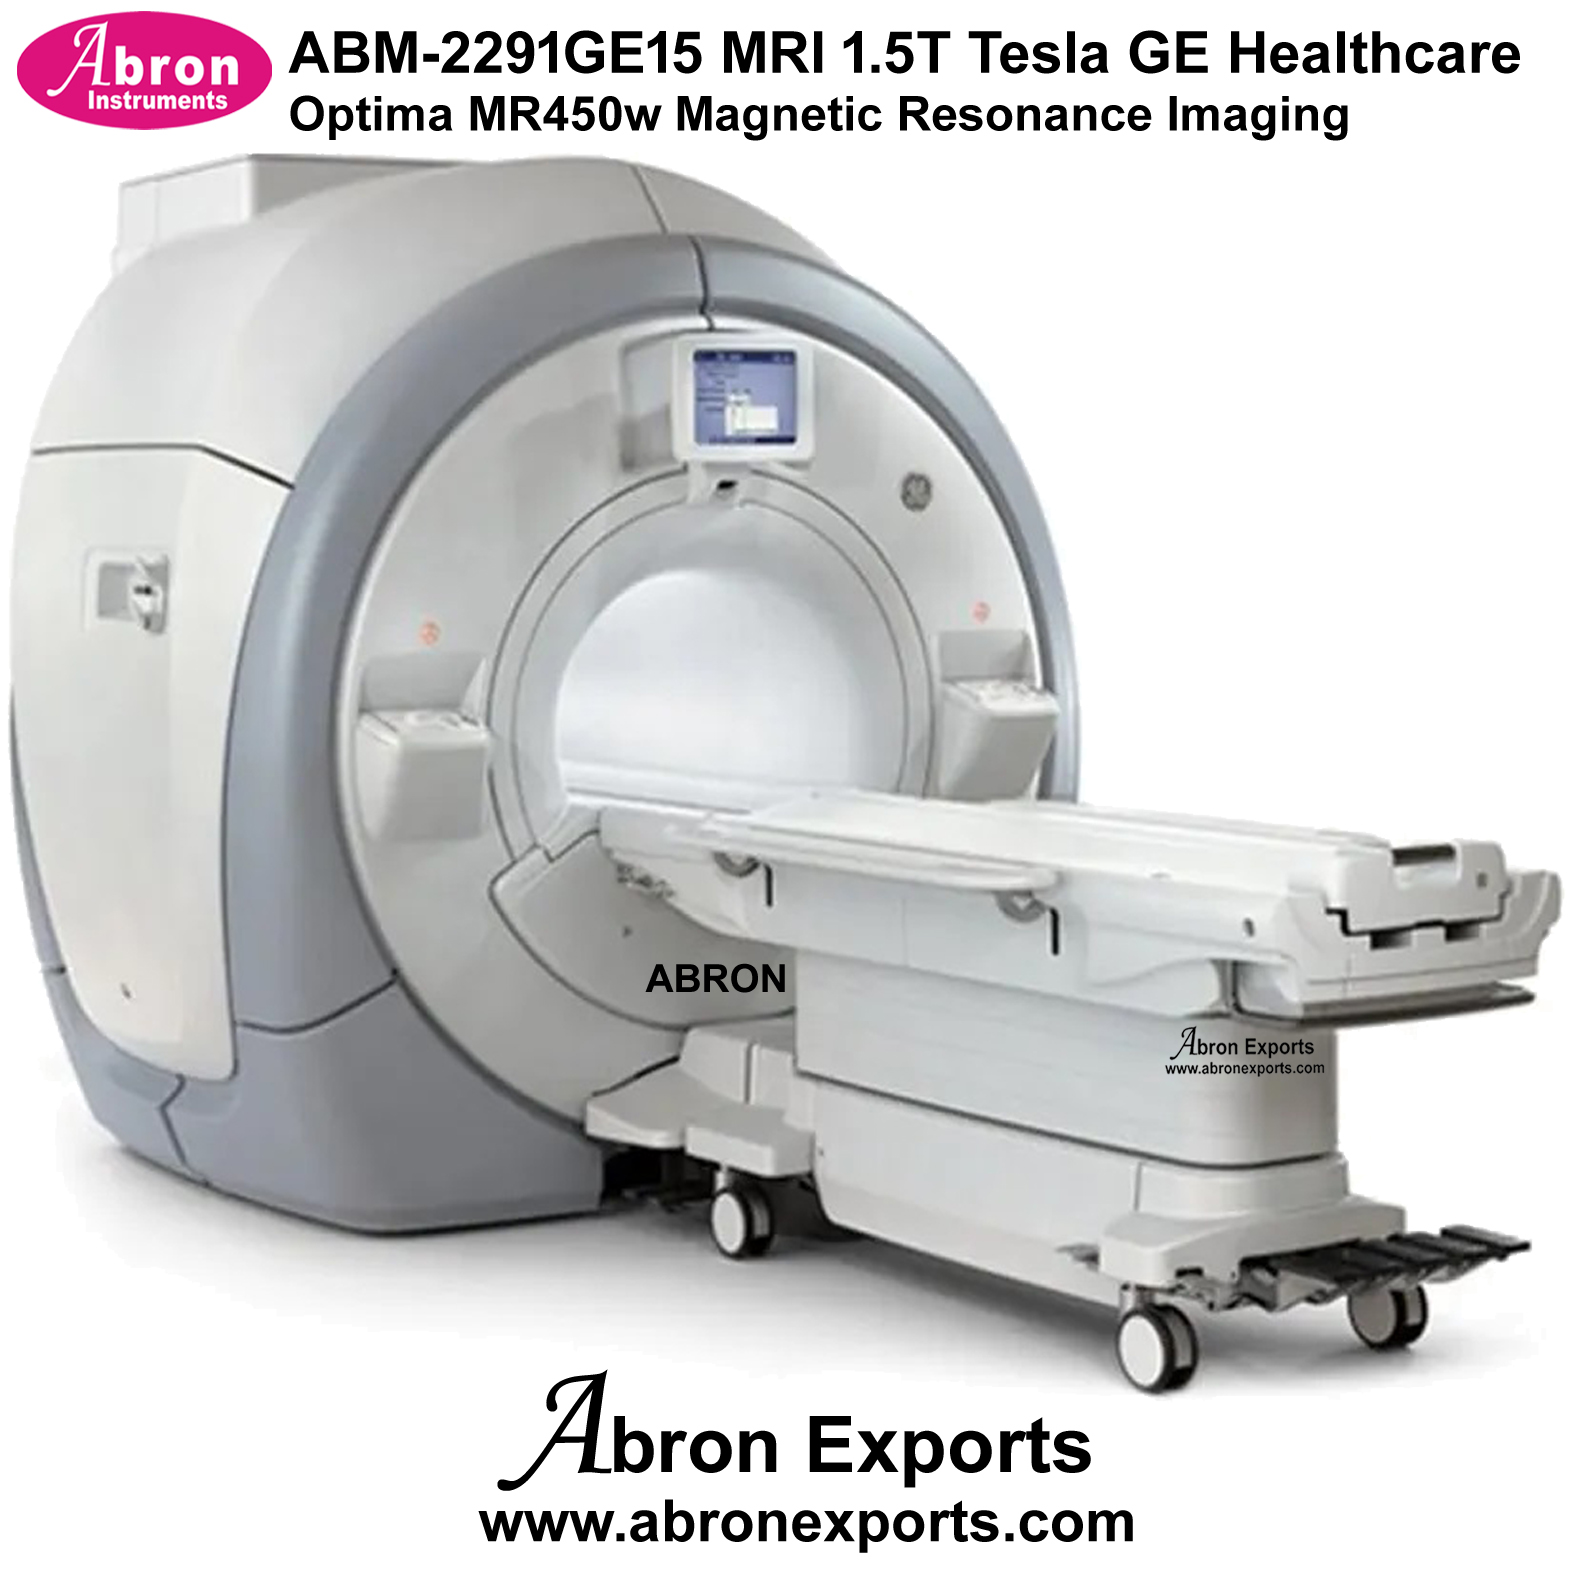 MRI 1.5T Tesla GE Healthcare Optima MR450w Magnetic Resonance Imaging New Referbished Hospital Medical Abron ABM-2291GE15 MMMM